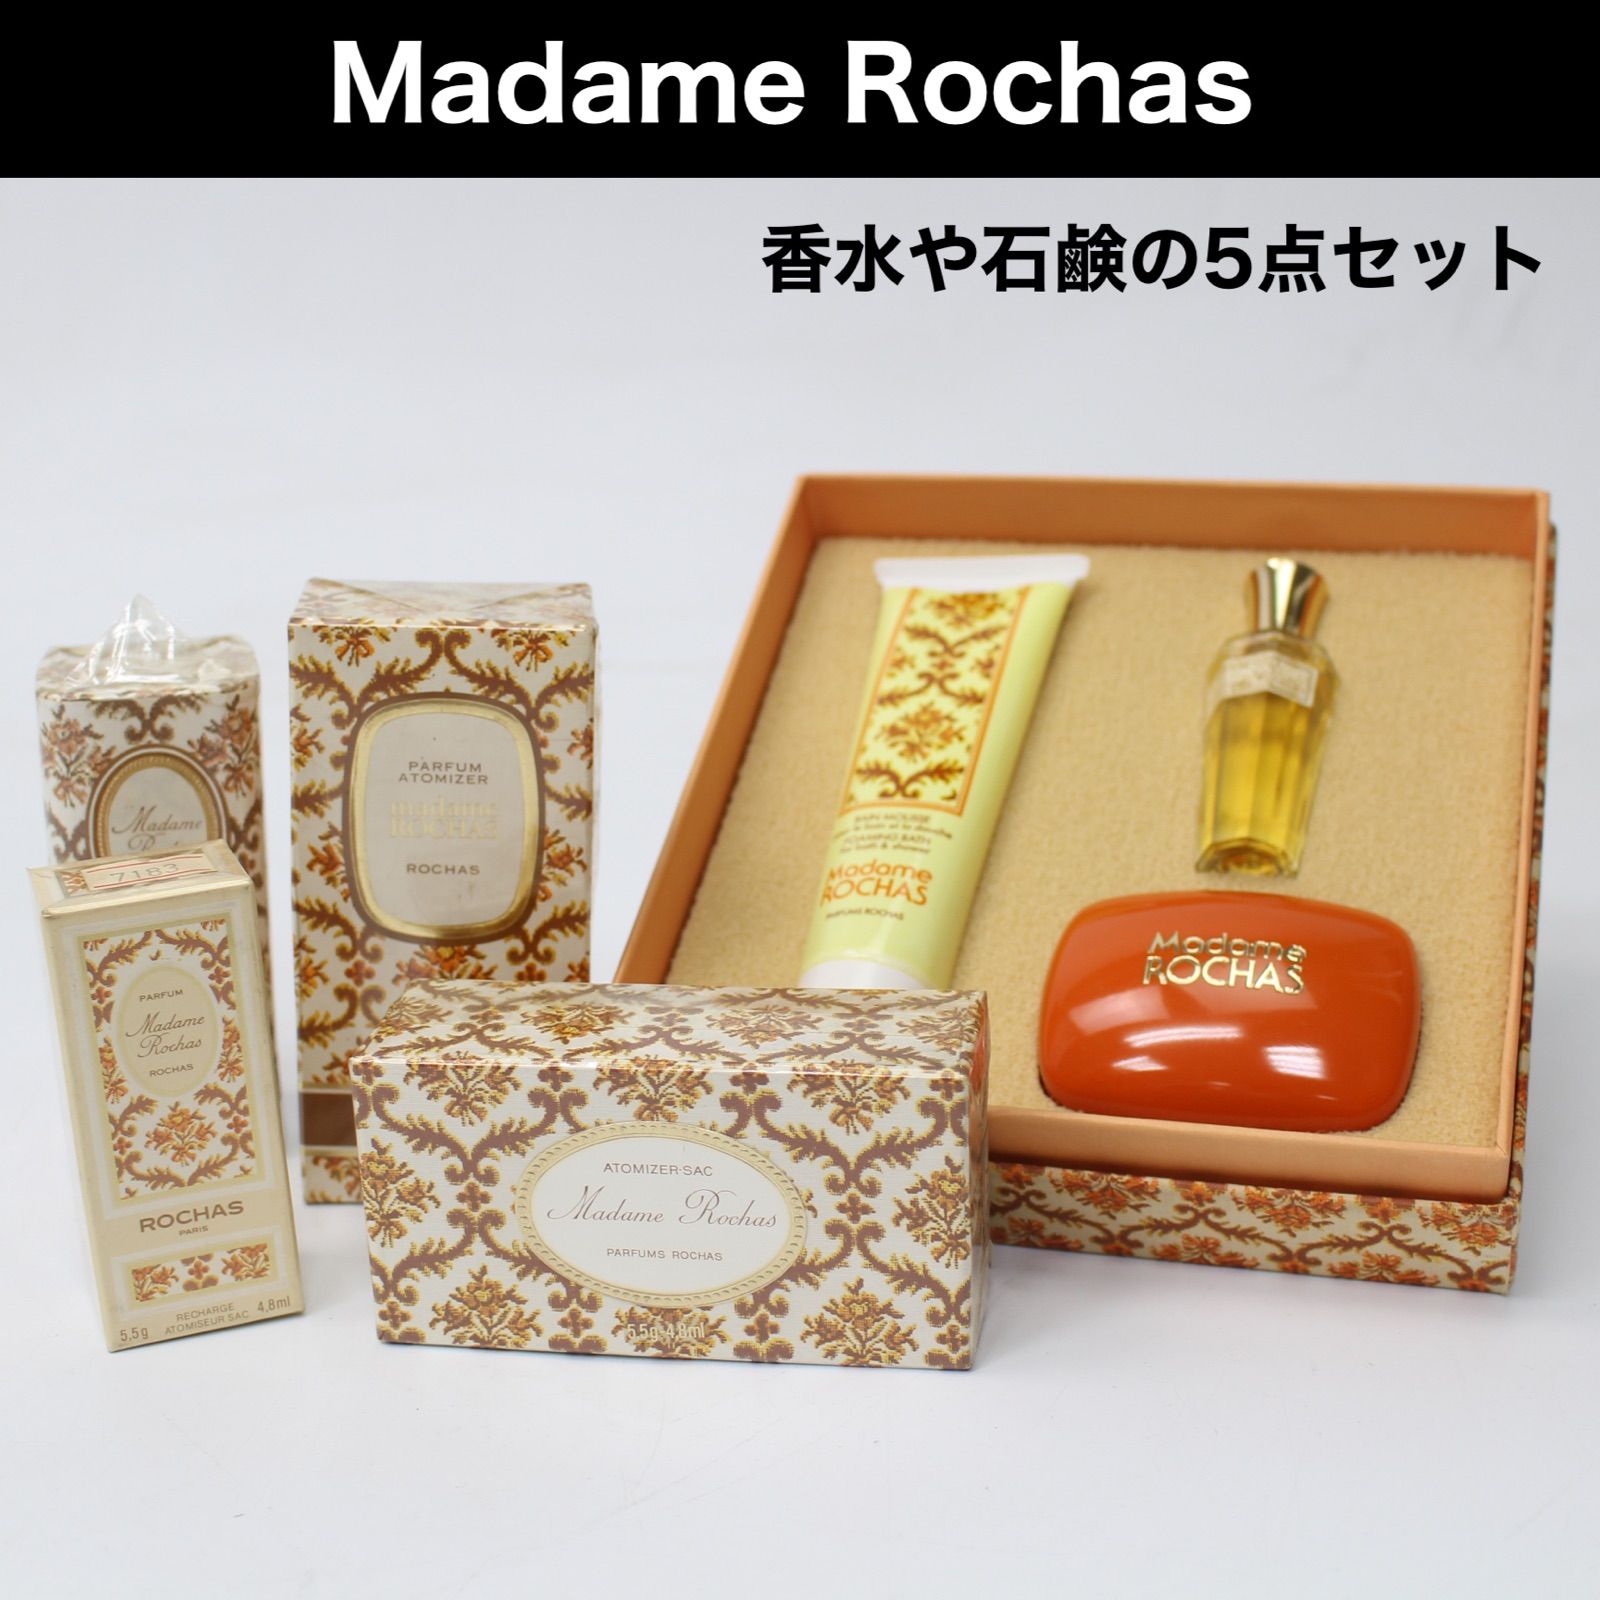 A306】Madame Rochas 香水等 5点セット - メルカリ